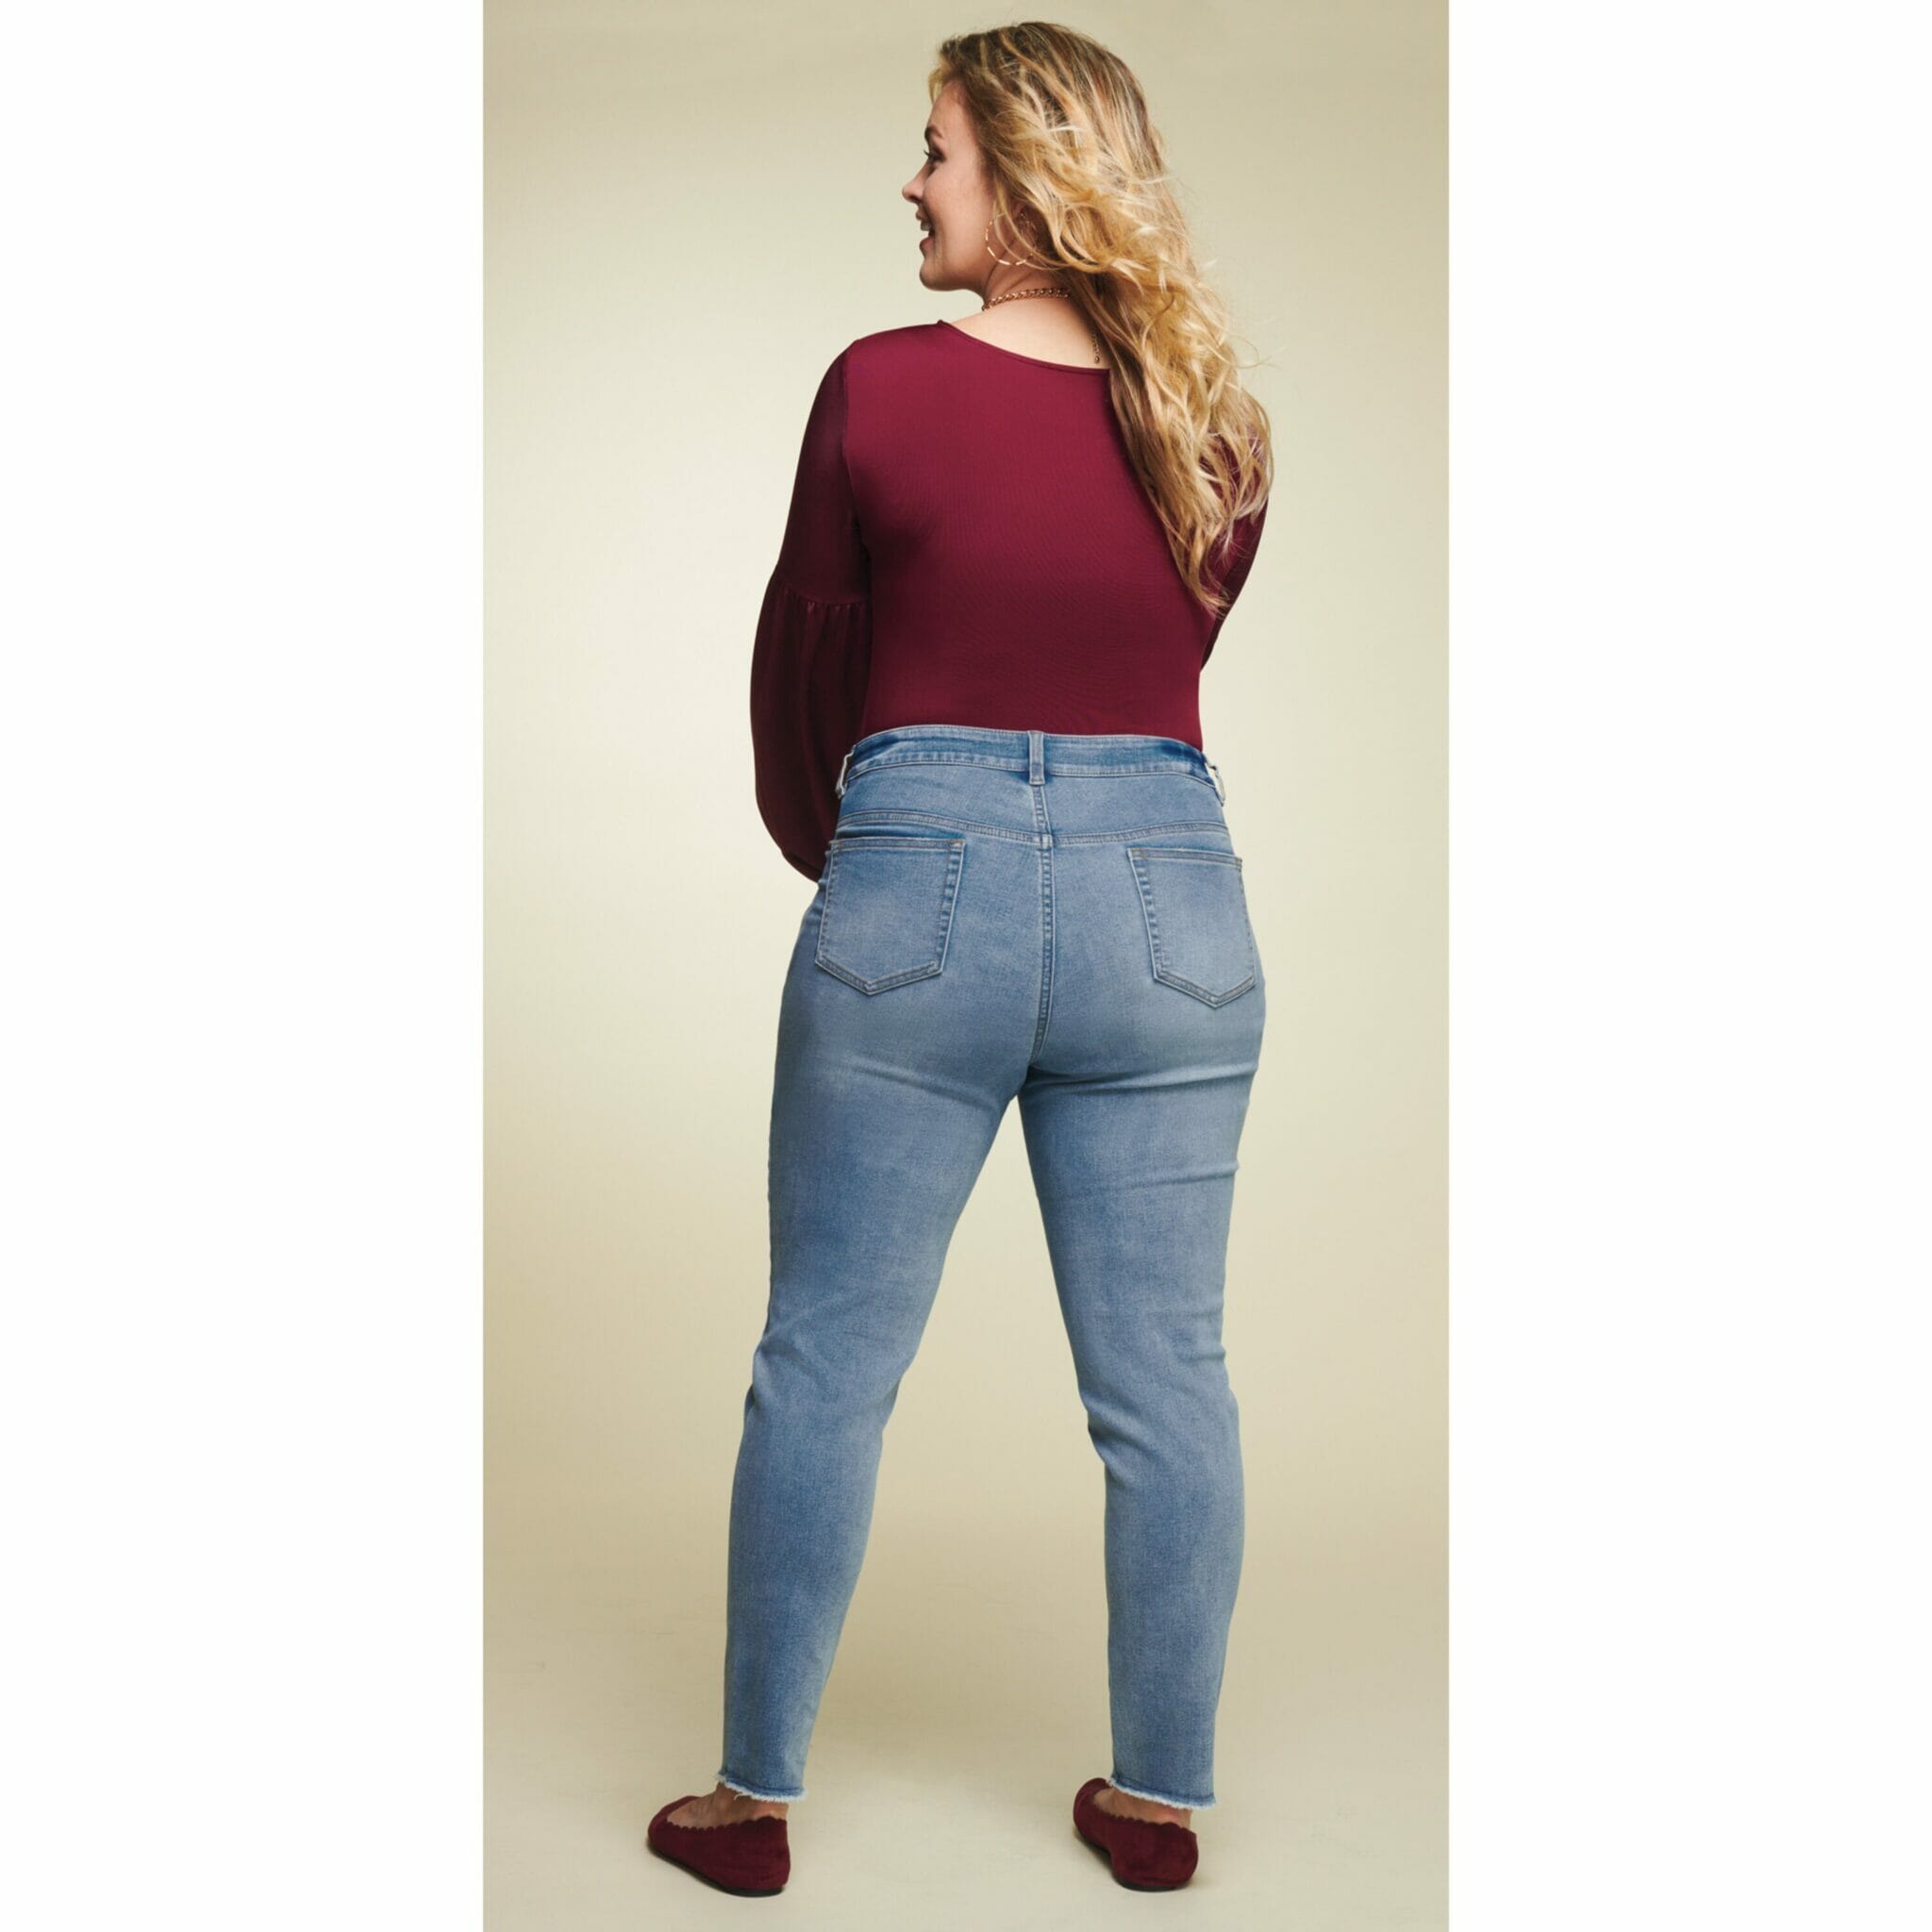 blonde plus-size model showing backside of jeans